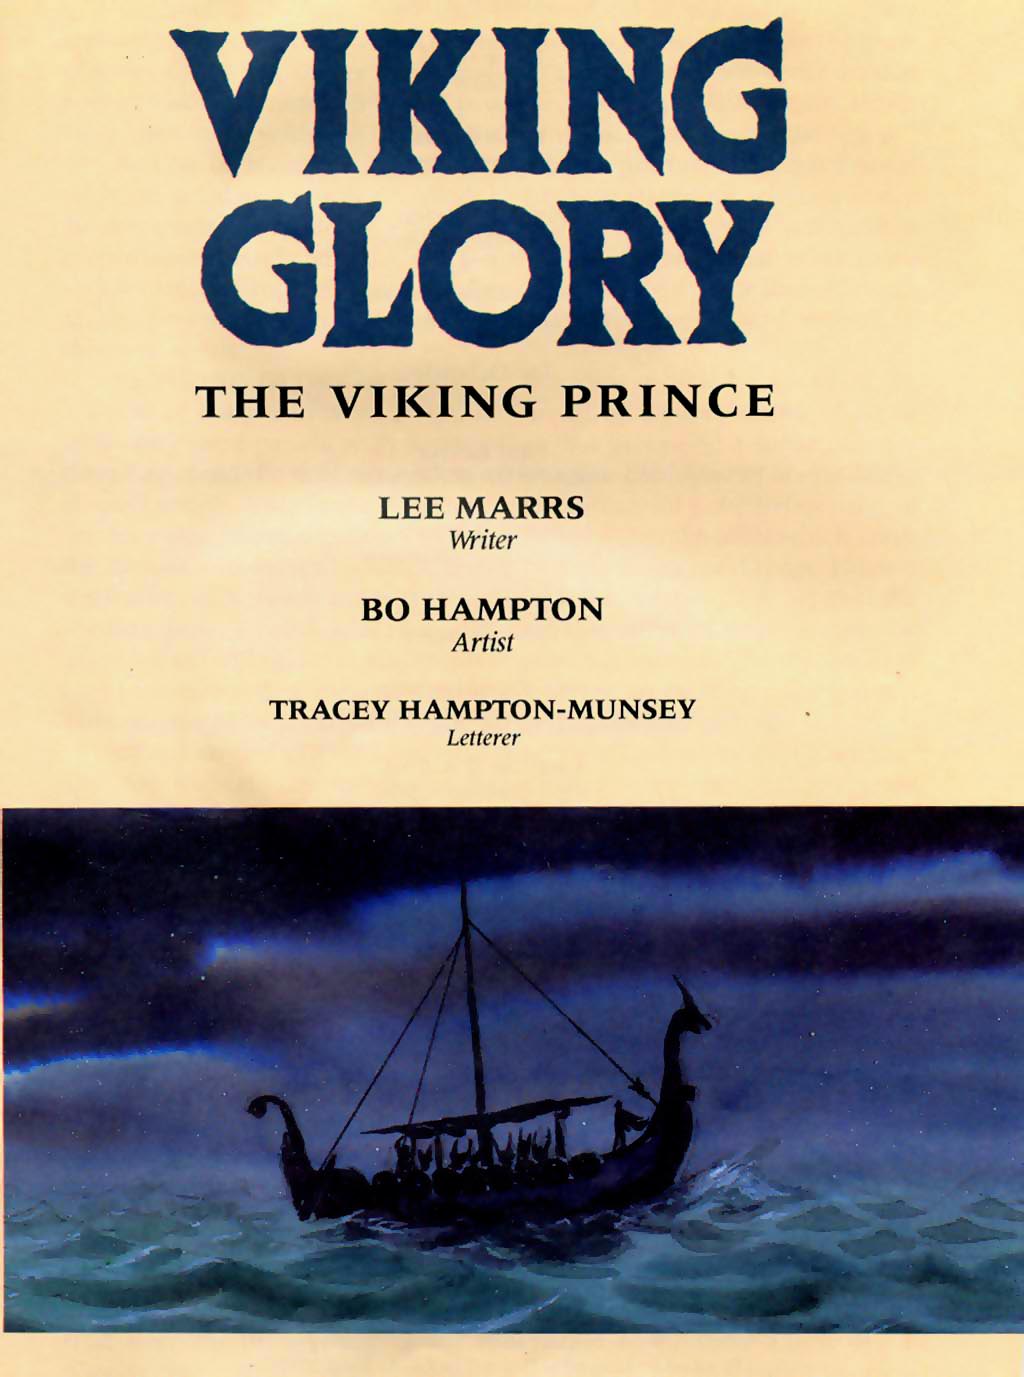 Read online Viking Glory: The Viking Prince comic -  Issue # TPB - 2